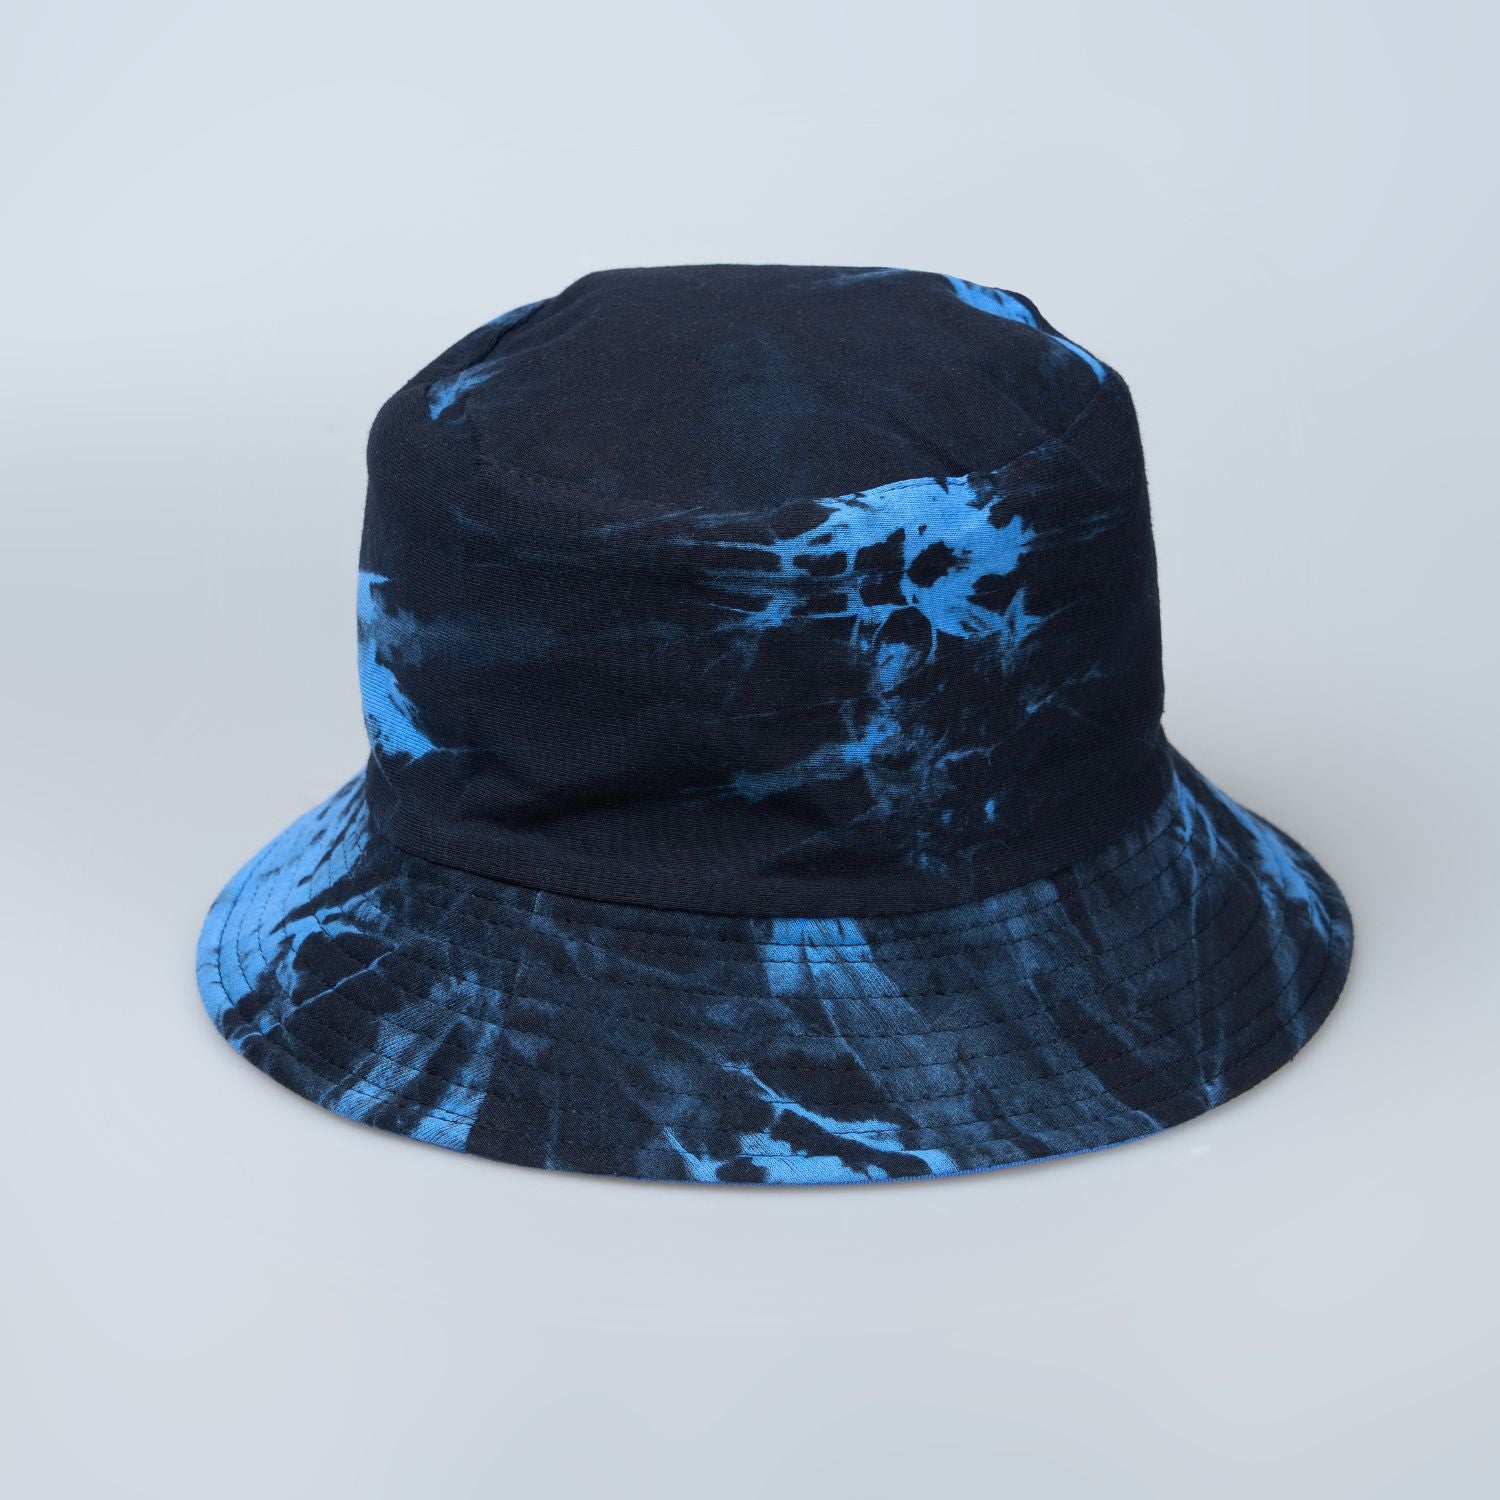 Blue colored, lightweight bucket hat for men